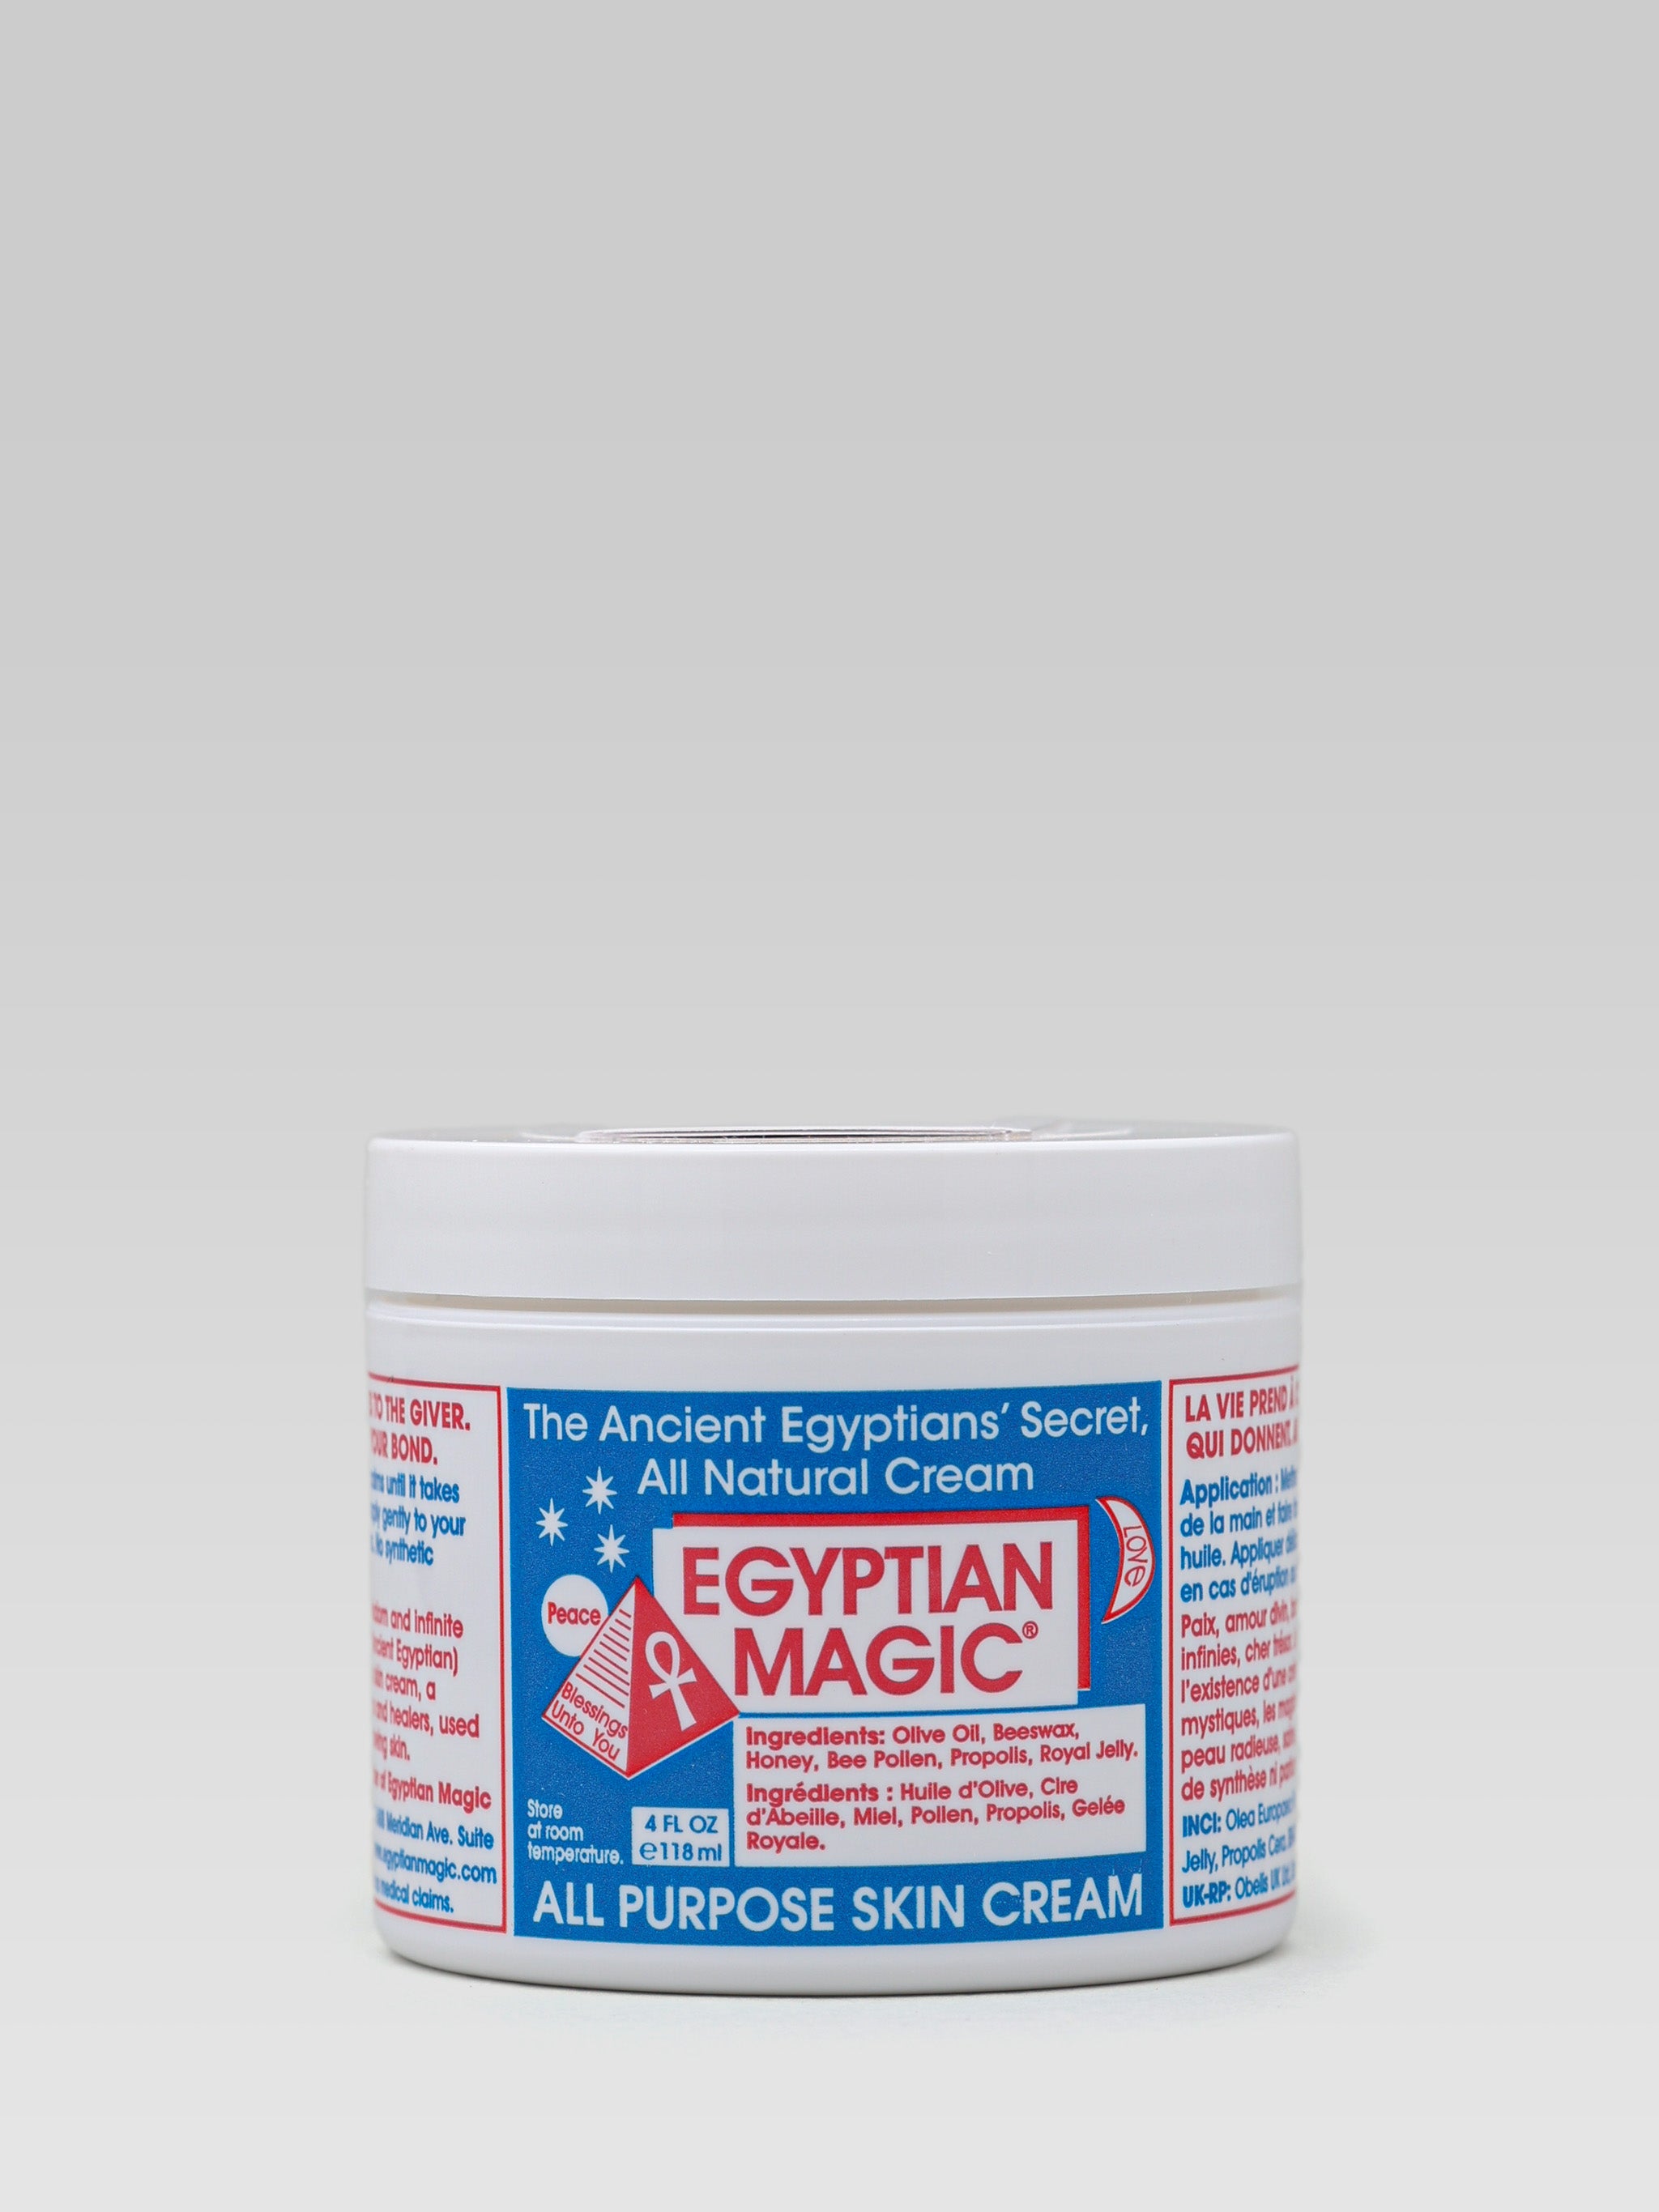 Egyptian Magic Magical Cream Original Size 